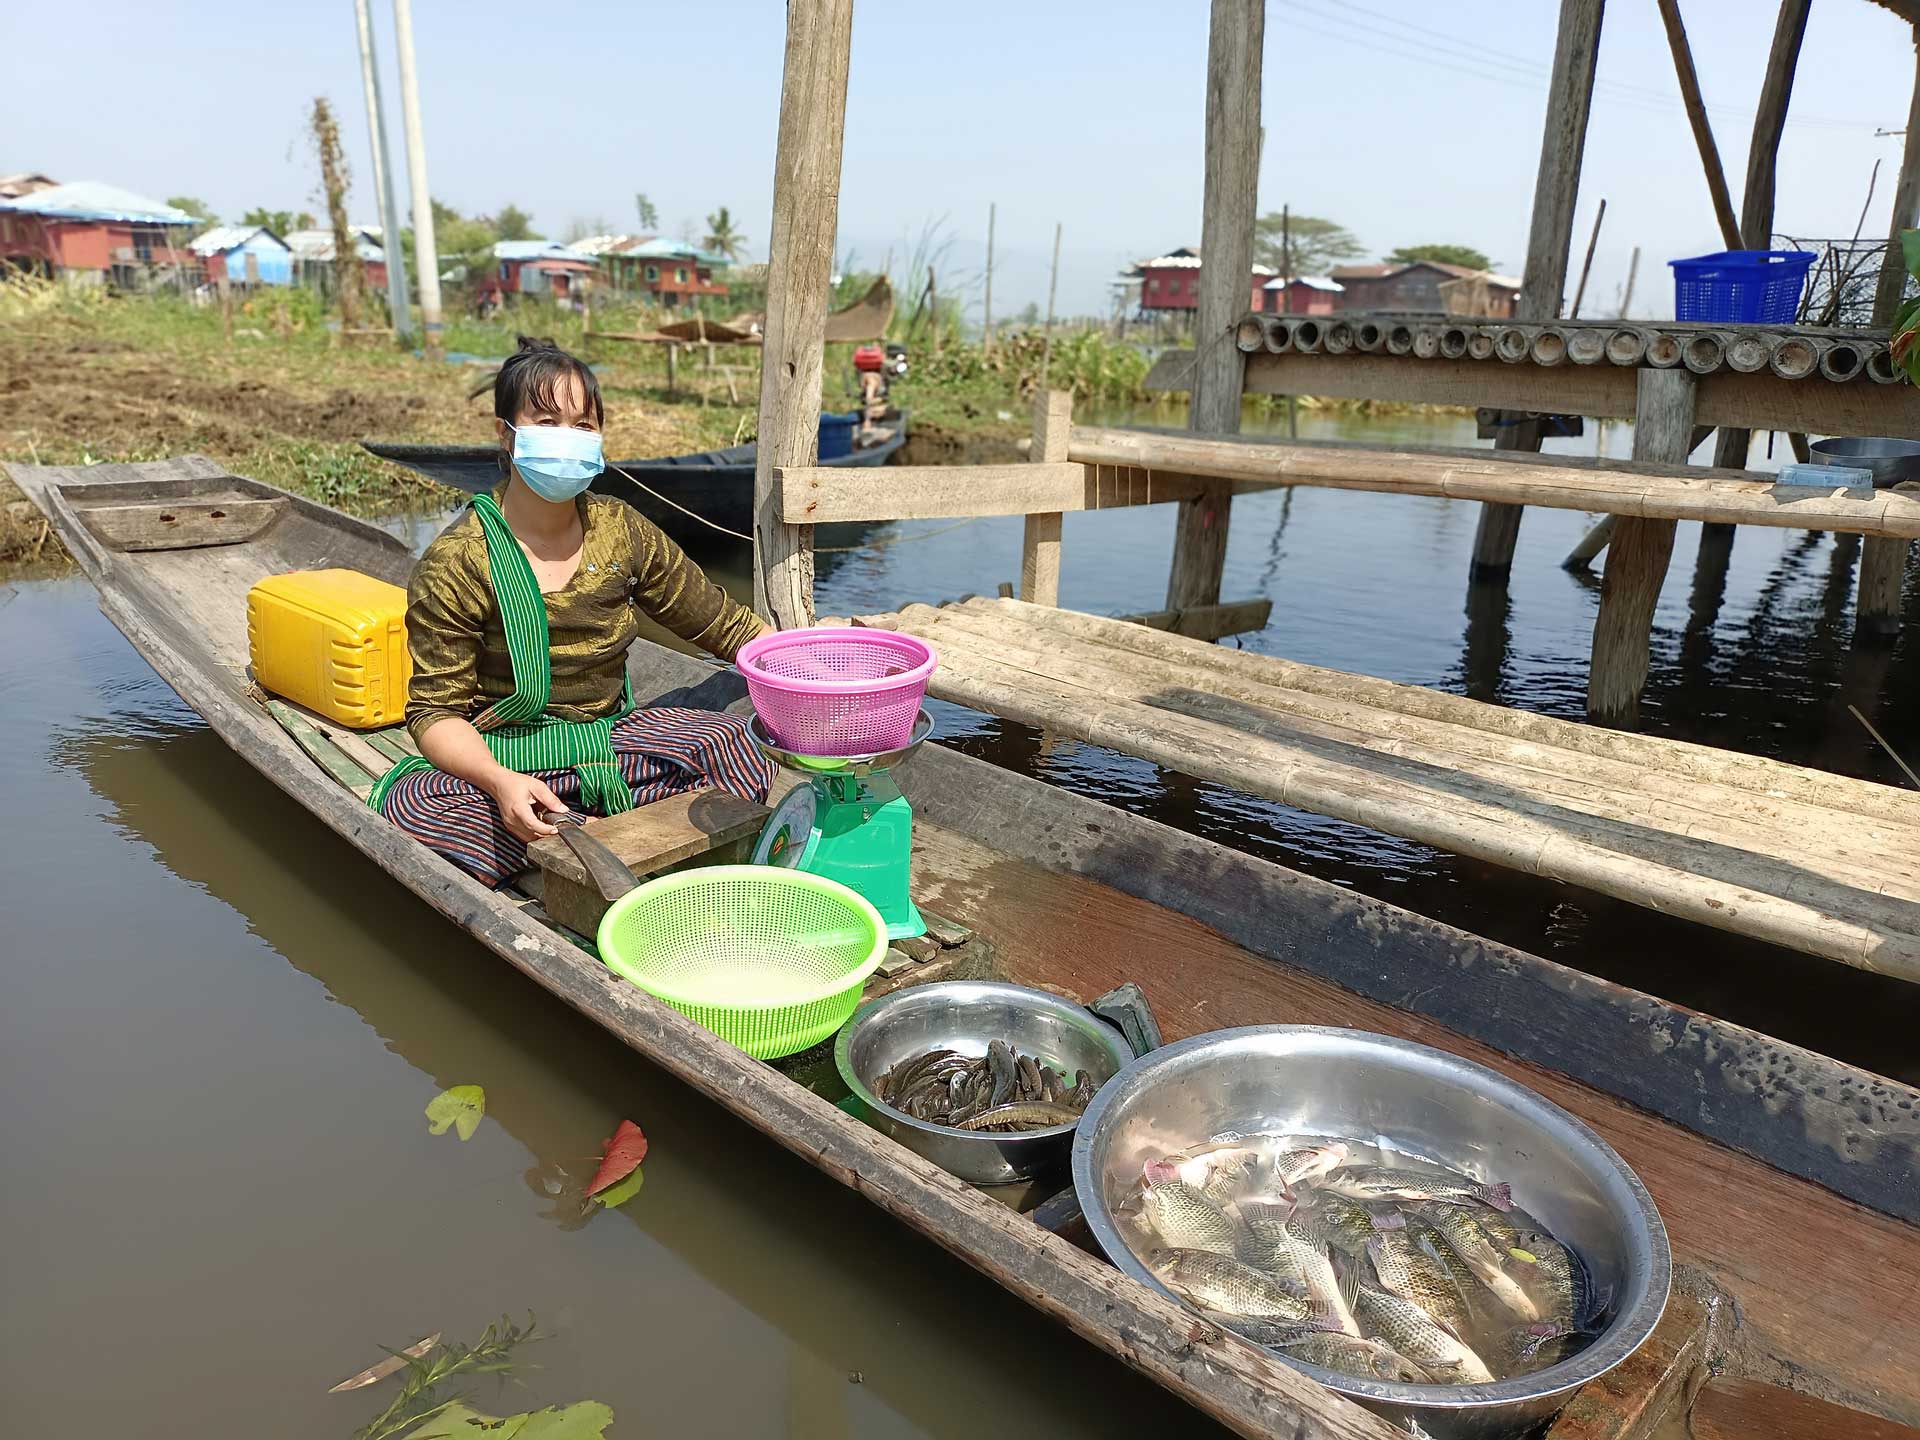 Daw Lae Lae Soe poses with her fish. Photo by Kyaw Moe Oo.